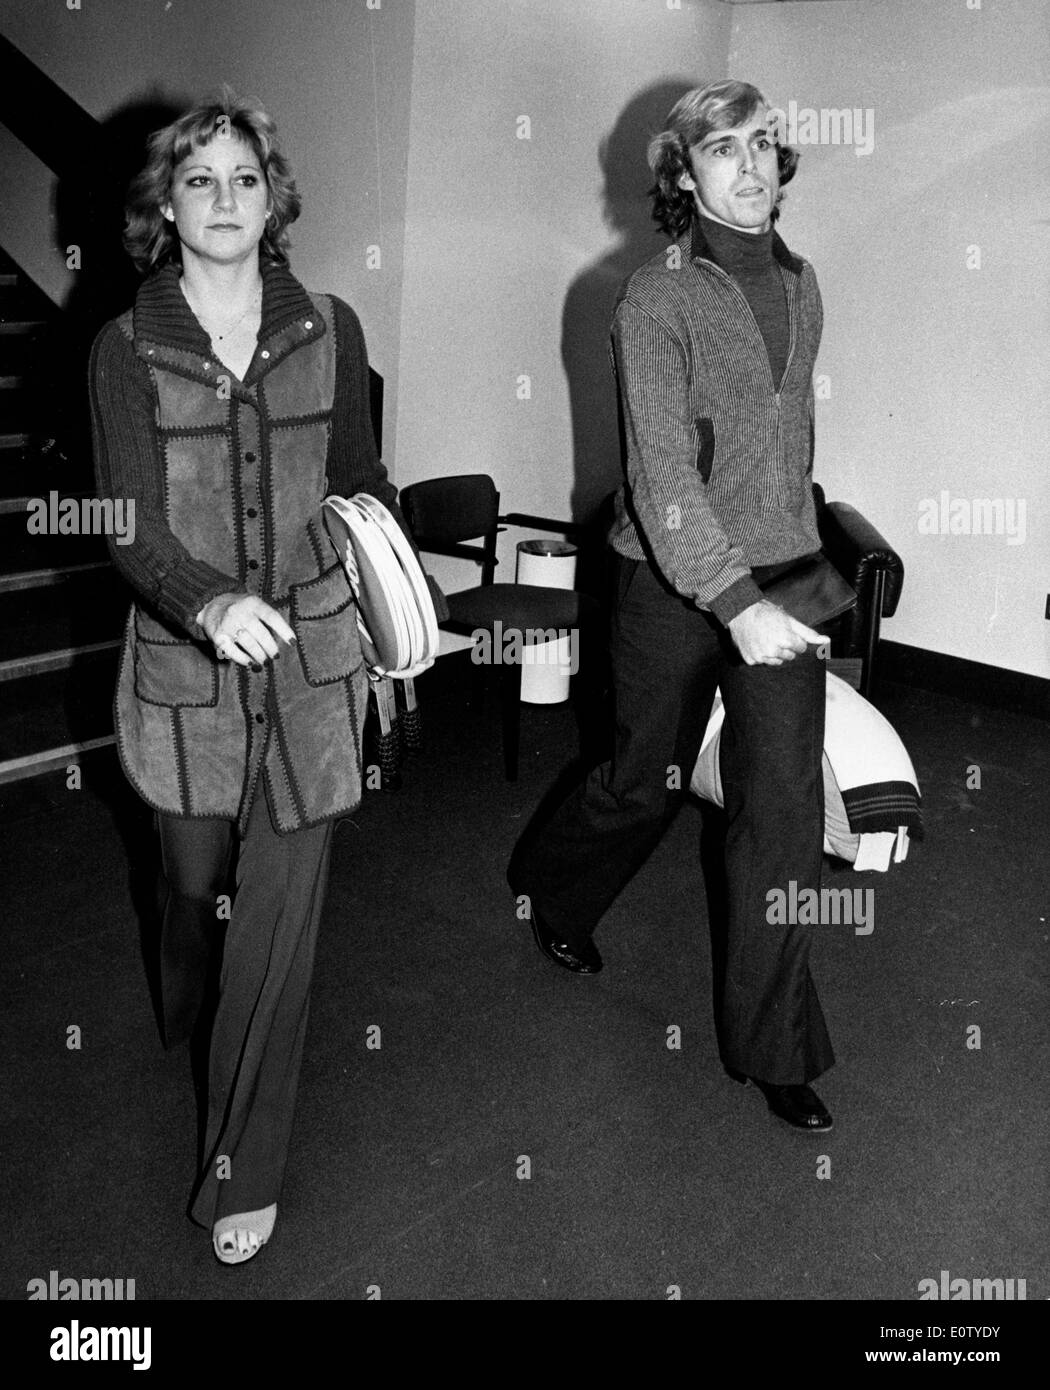 John Lloyd walking with his wife Chris Evert Stock Photo